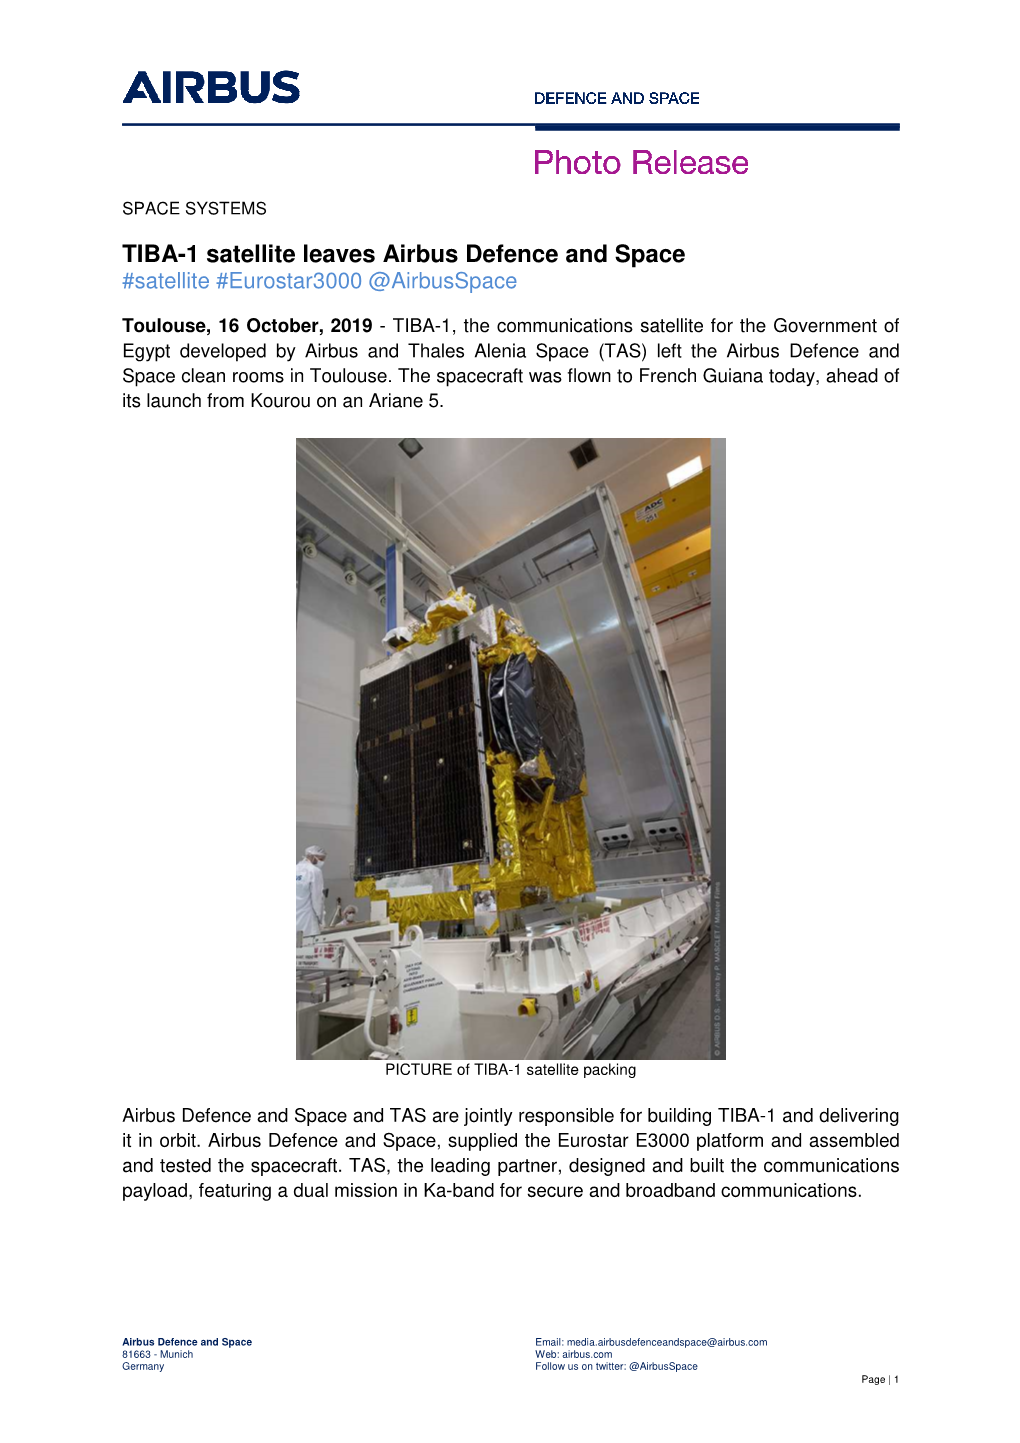 TIBA-1 Satellite Leaves Airbus Defence and Space #Satellite #Eurostar3000 @Airbusspace